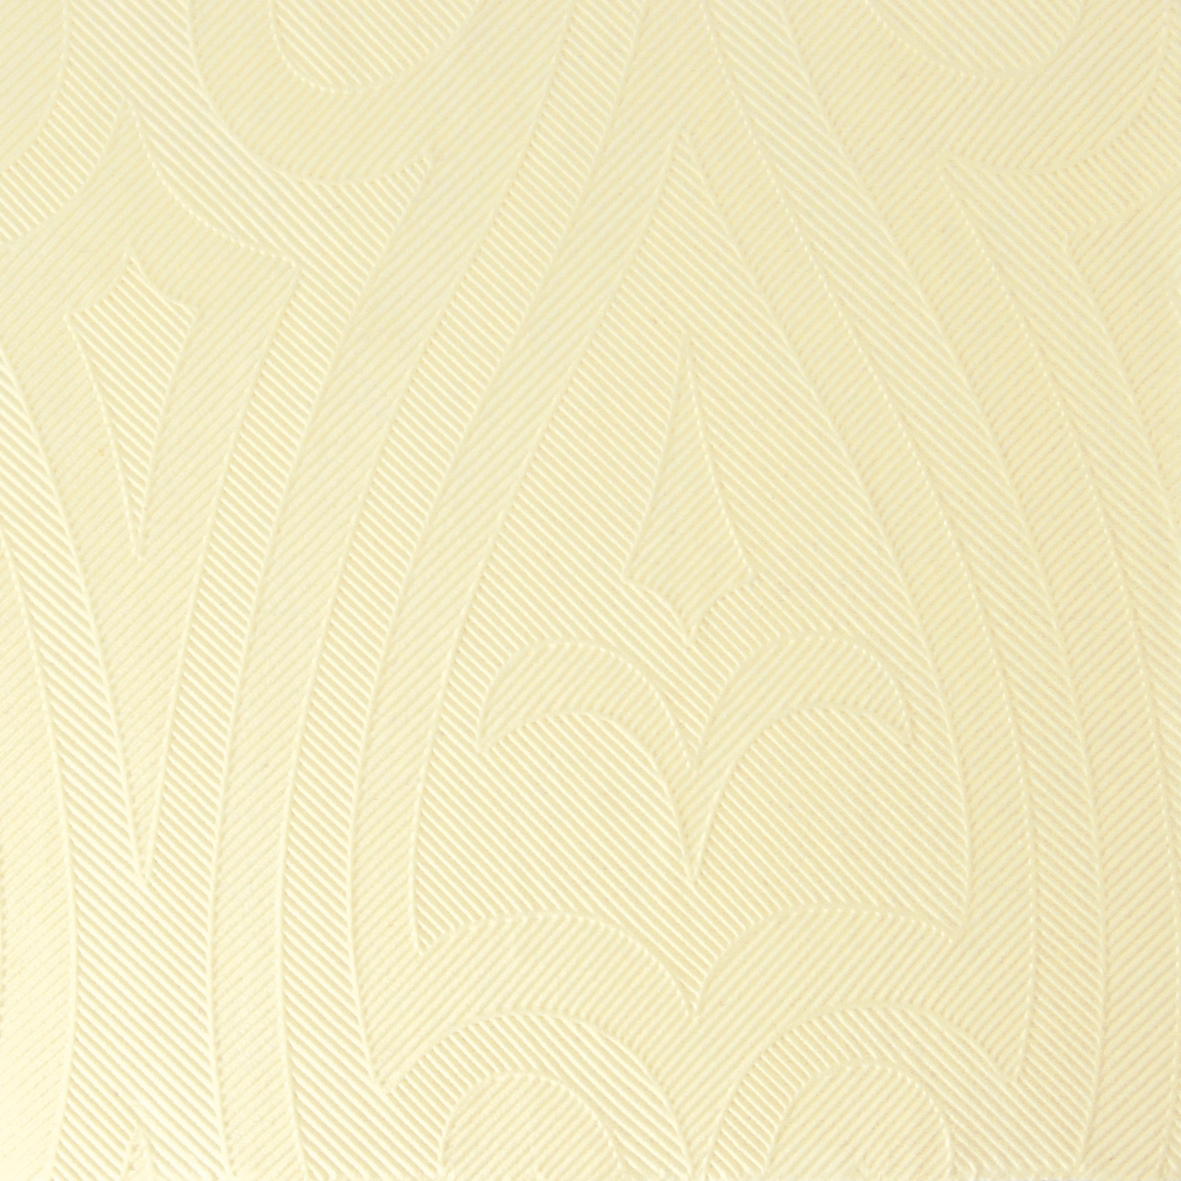 60048 Servet cream elegance lily 48x48cm. 6x40 st